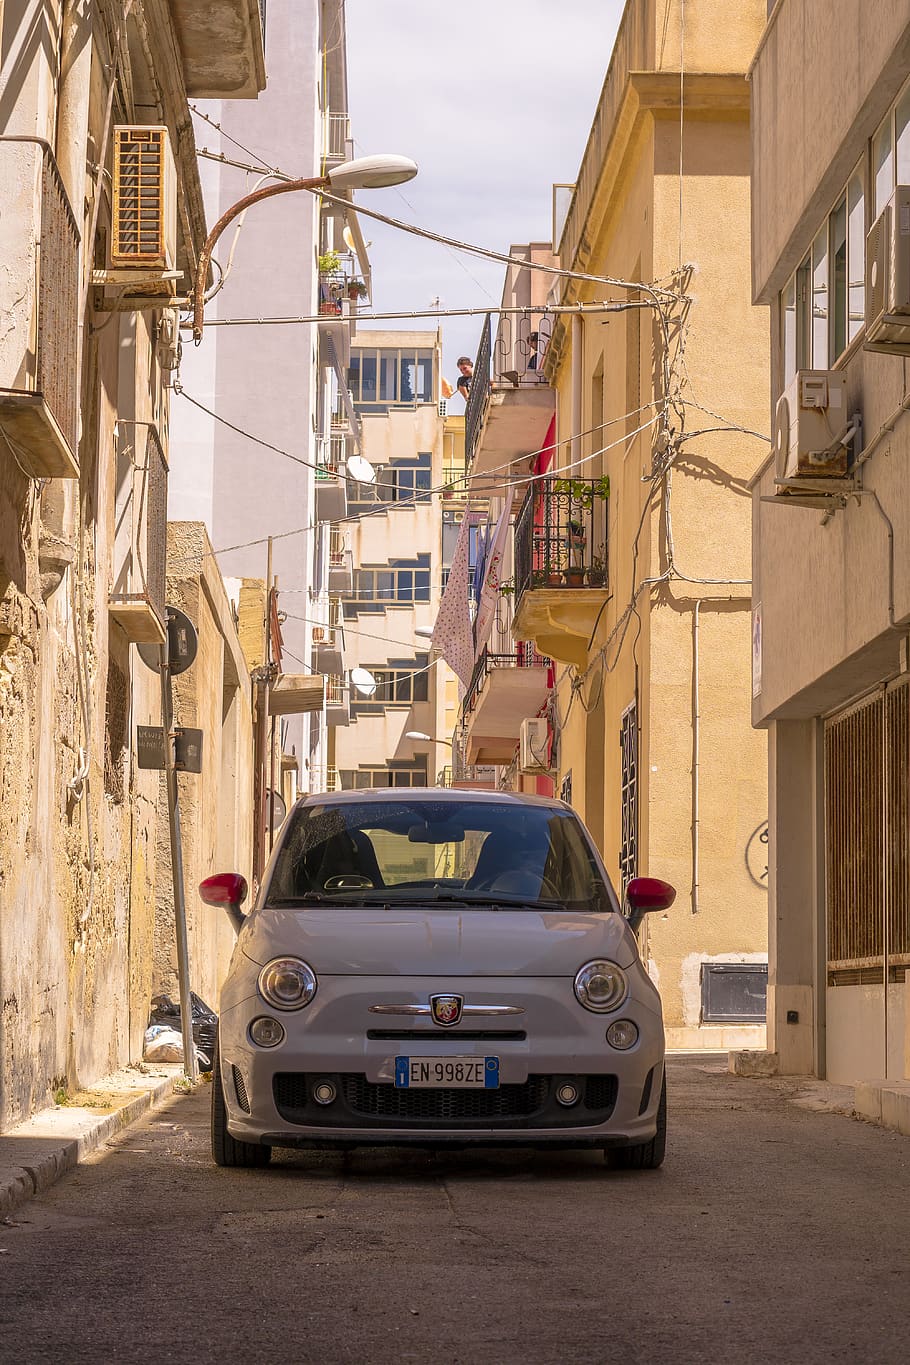 Hd Wallpaper Italy Trapani 500 Abarth Sicily Car Fiat Mode Of Transportation Wallpaper Flare